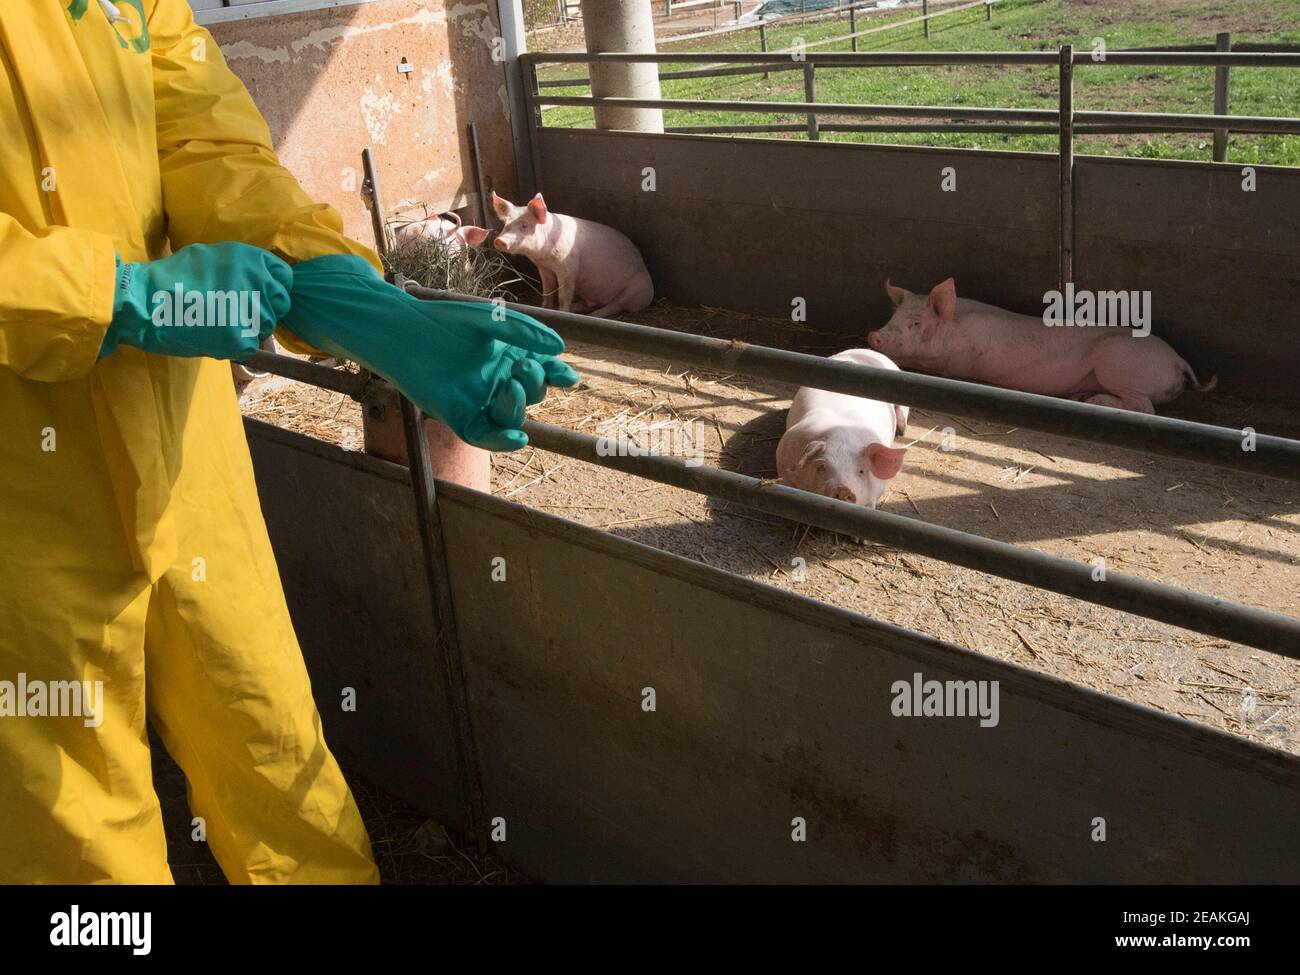 classical swine fever or hog cholera Stock Photo